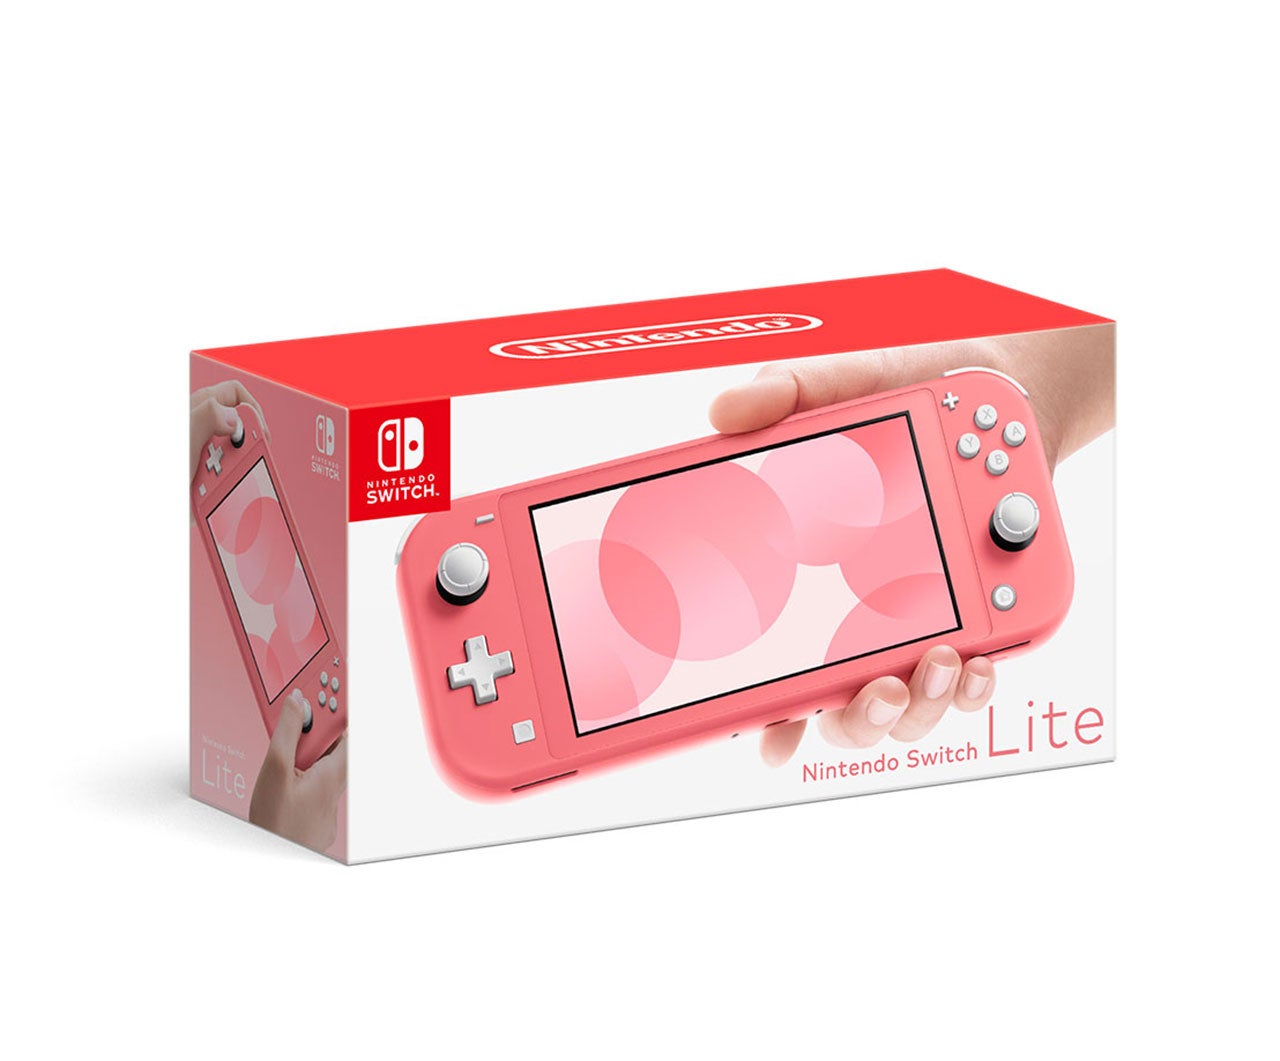 Image for Nintendo announces a pretty pink Nintendo Switch Lite